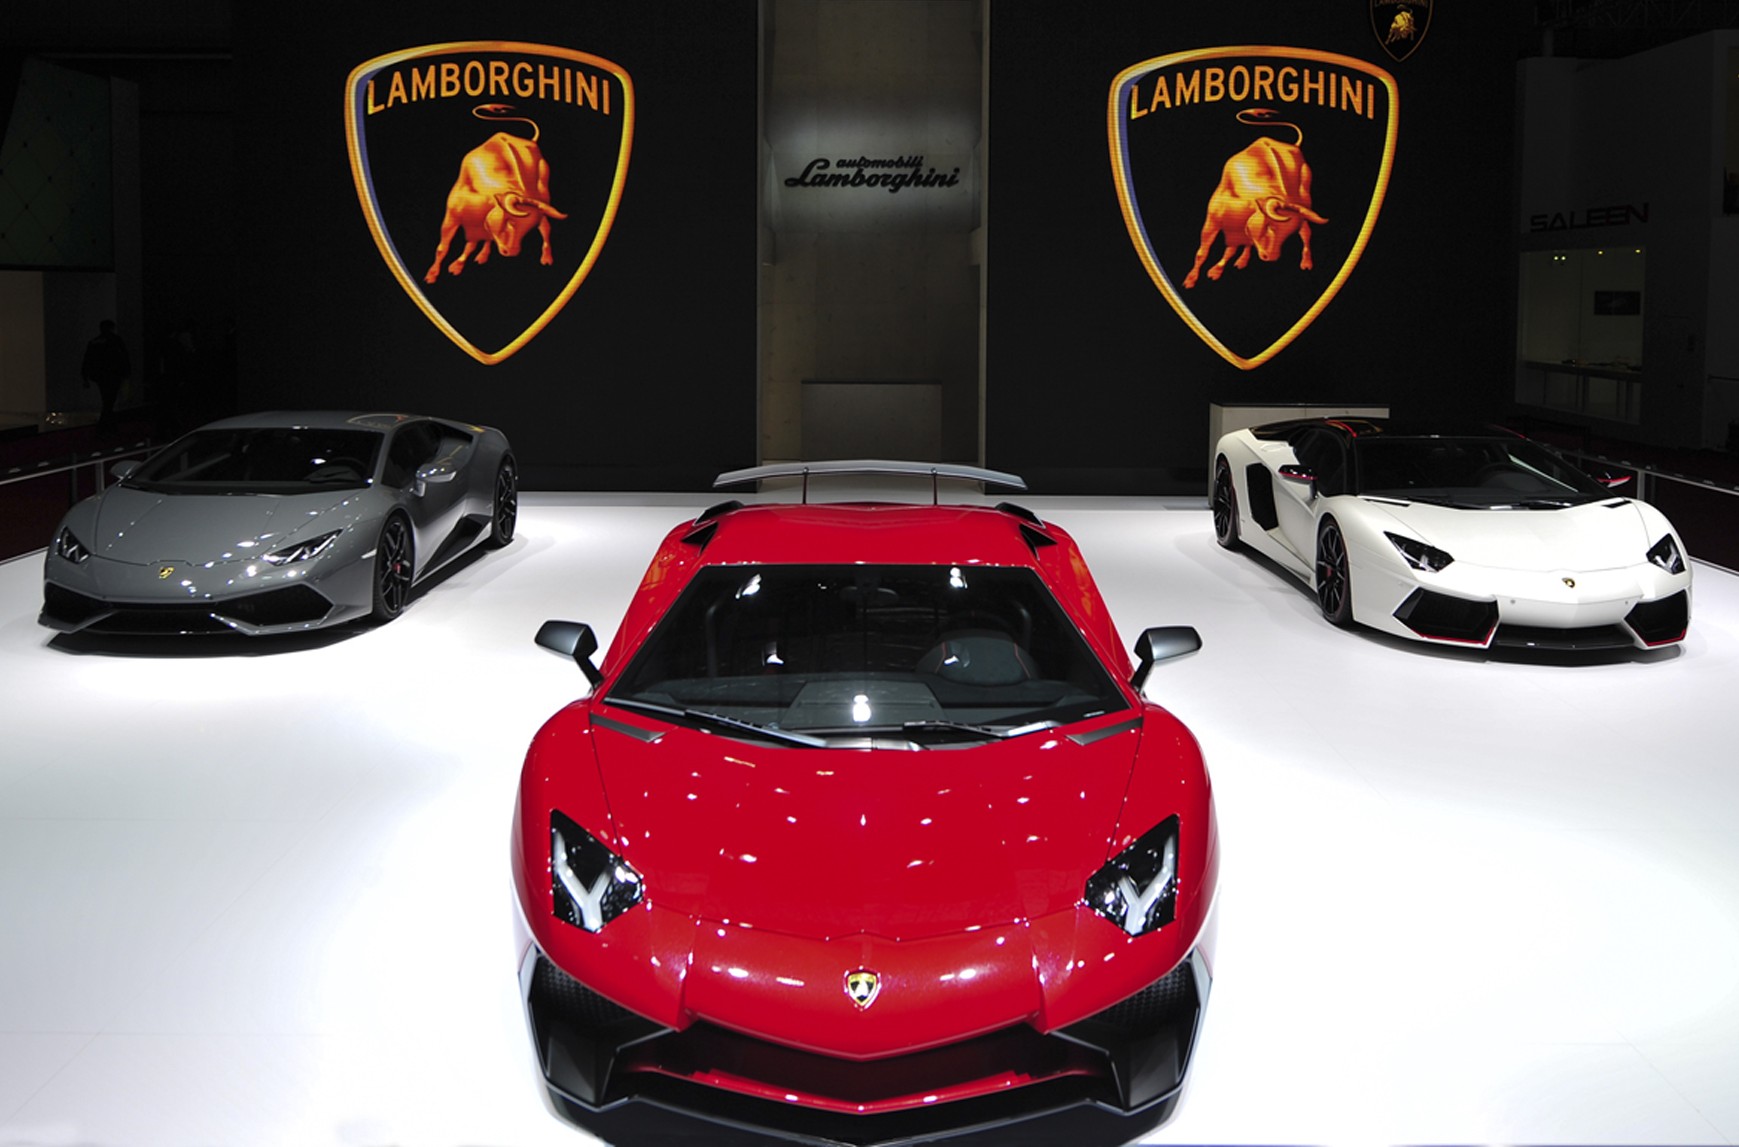 2015 Shanghai Auto Show - Lamborghini Booth